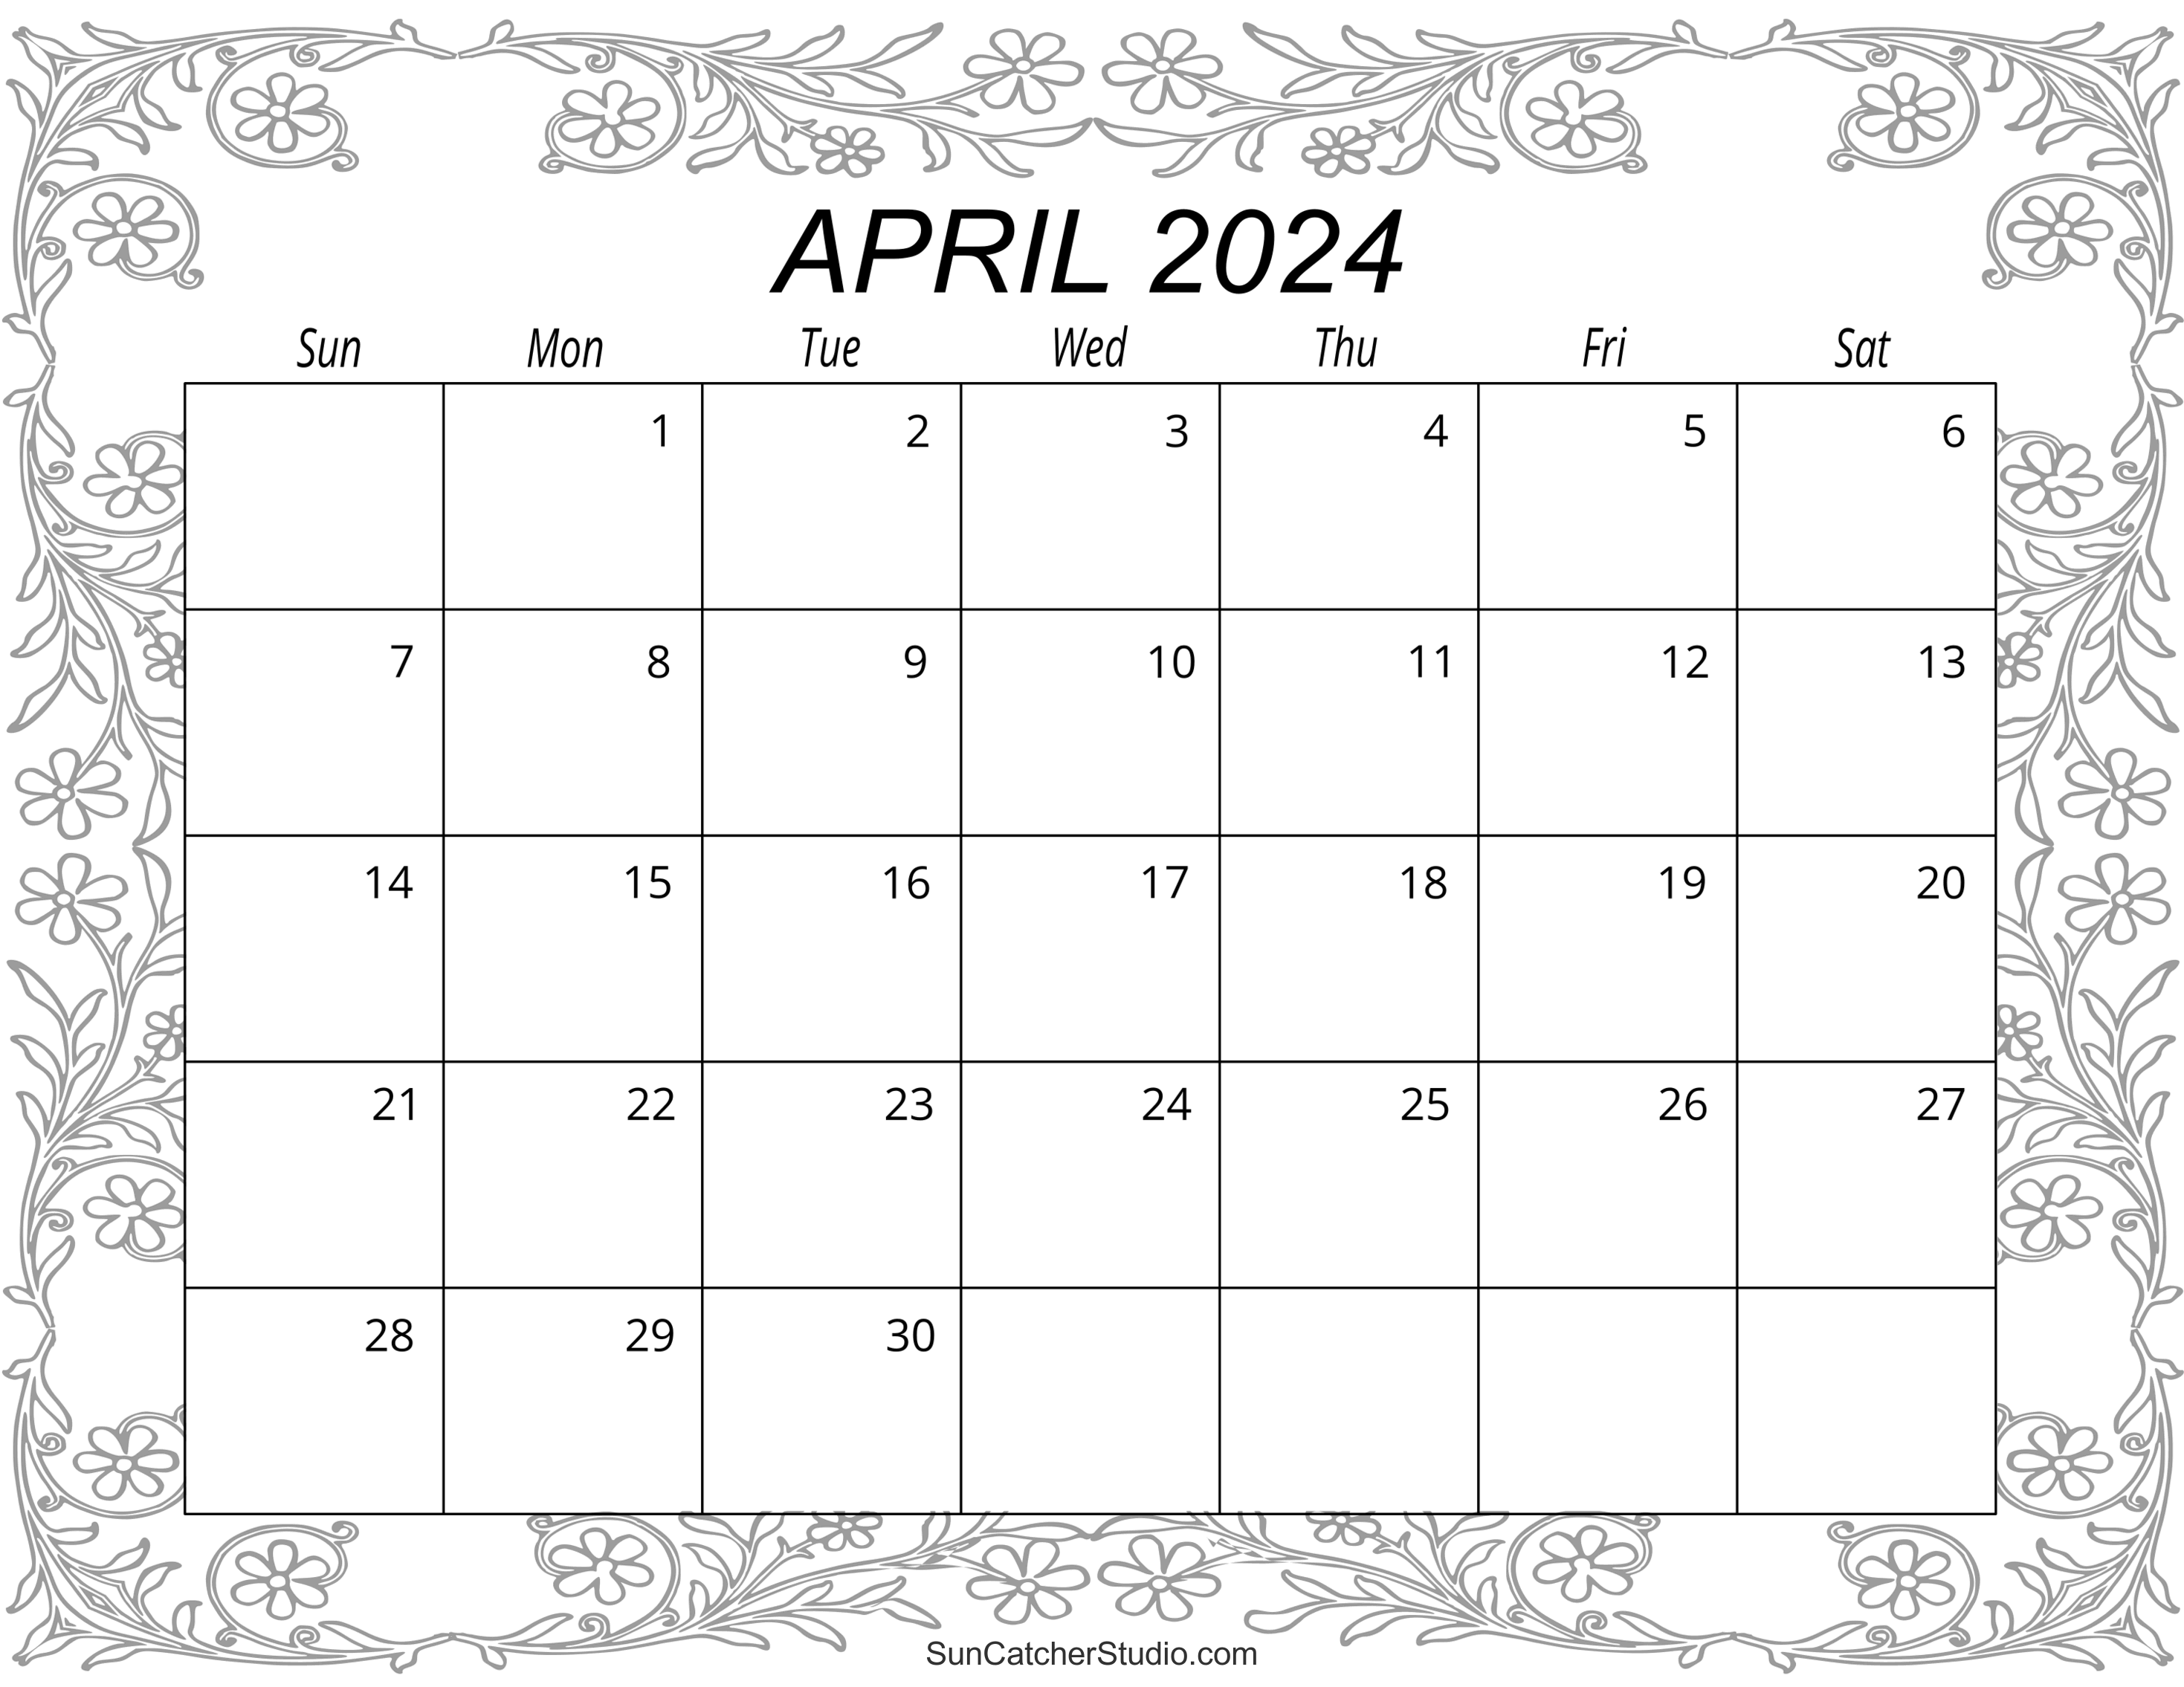 april-2024-calendar-free-printable-diy-projects-patterns